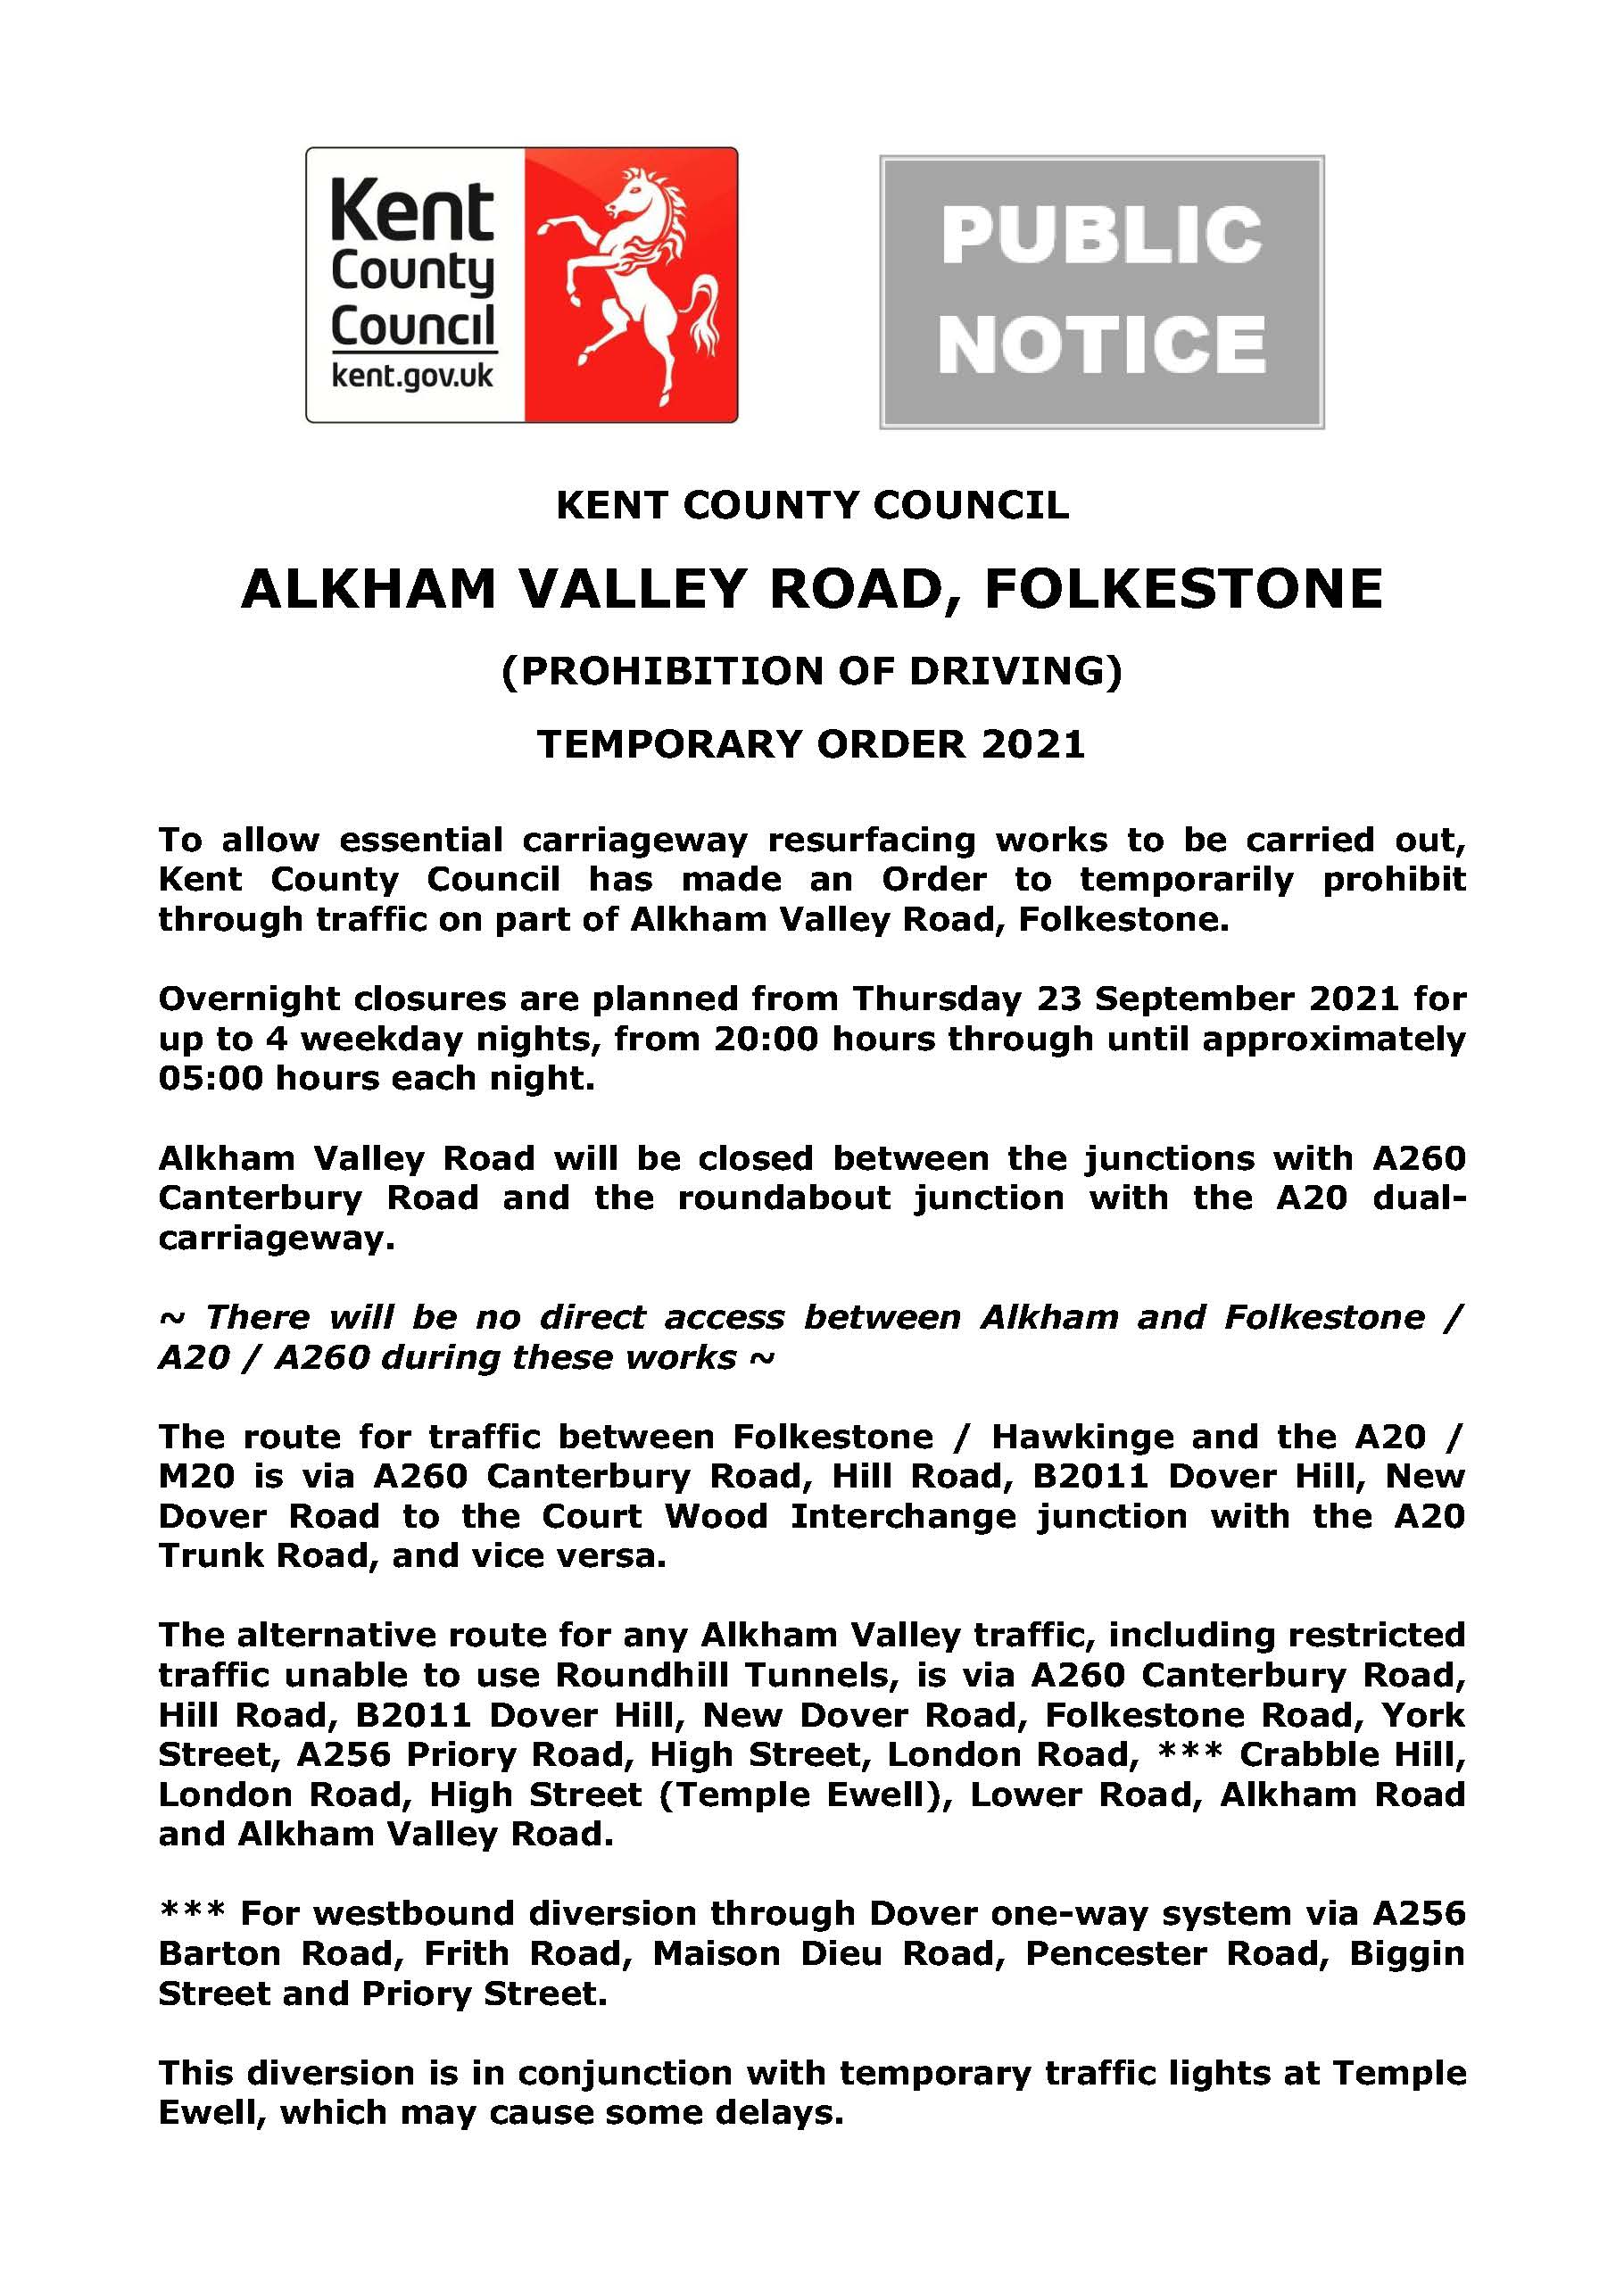 Temporary Overnight Road Closures – Alkham Valley Road, Folkestone – 23, 24, 27 & 28 September 2021